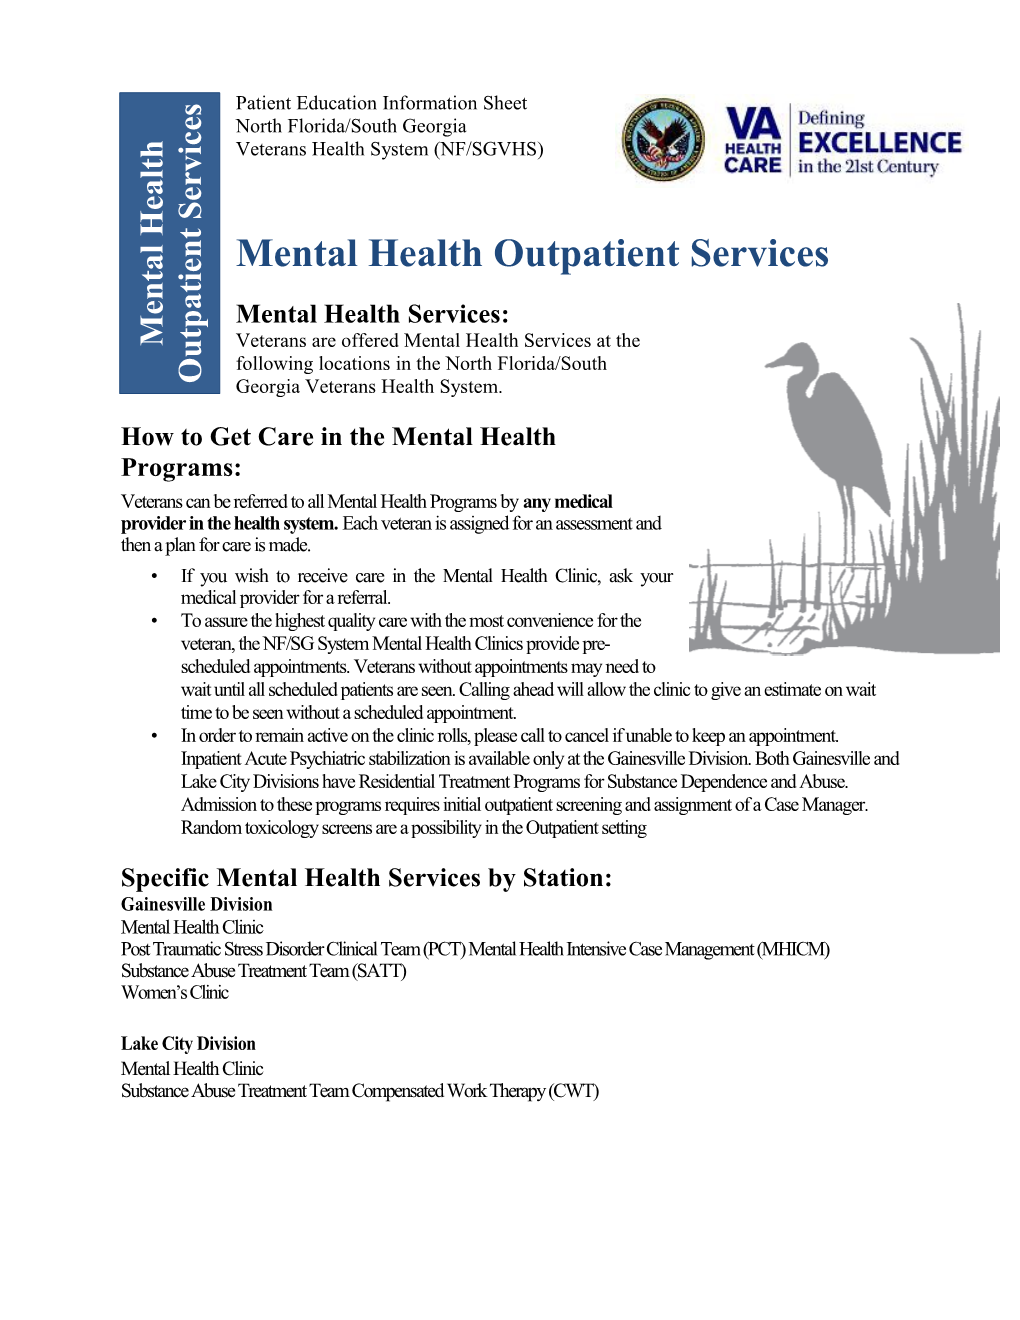 Mental Health Outpatient Services